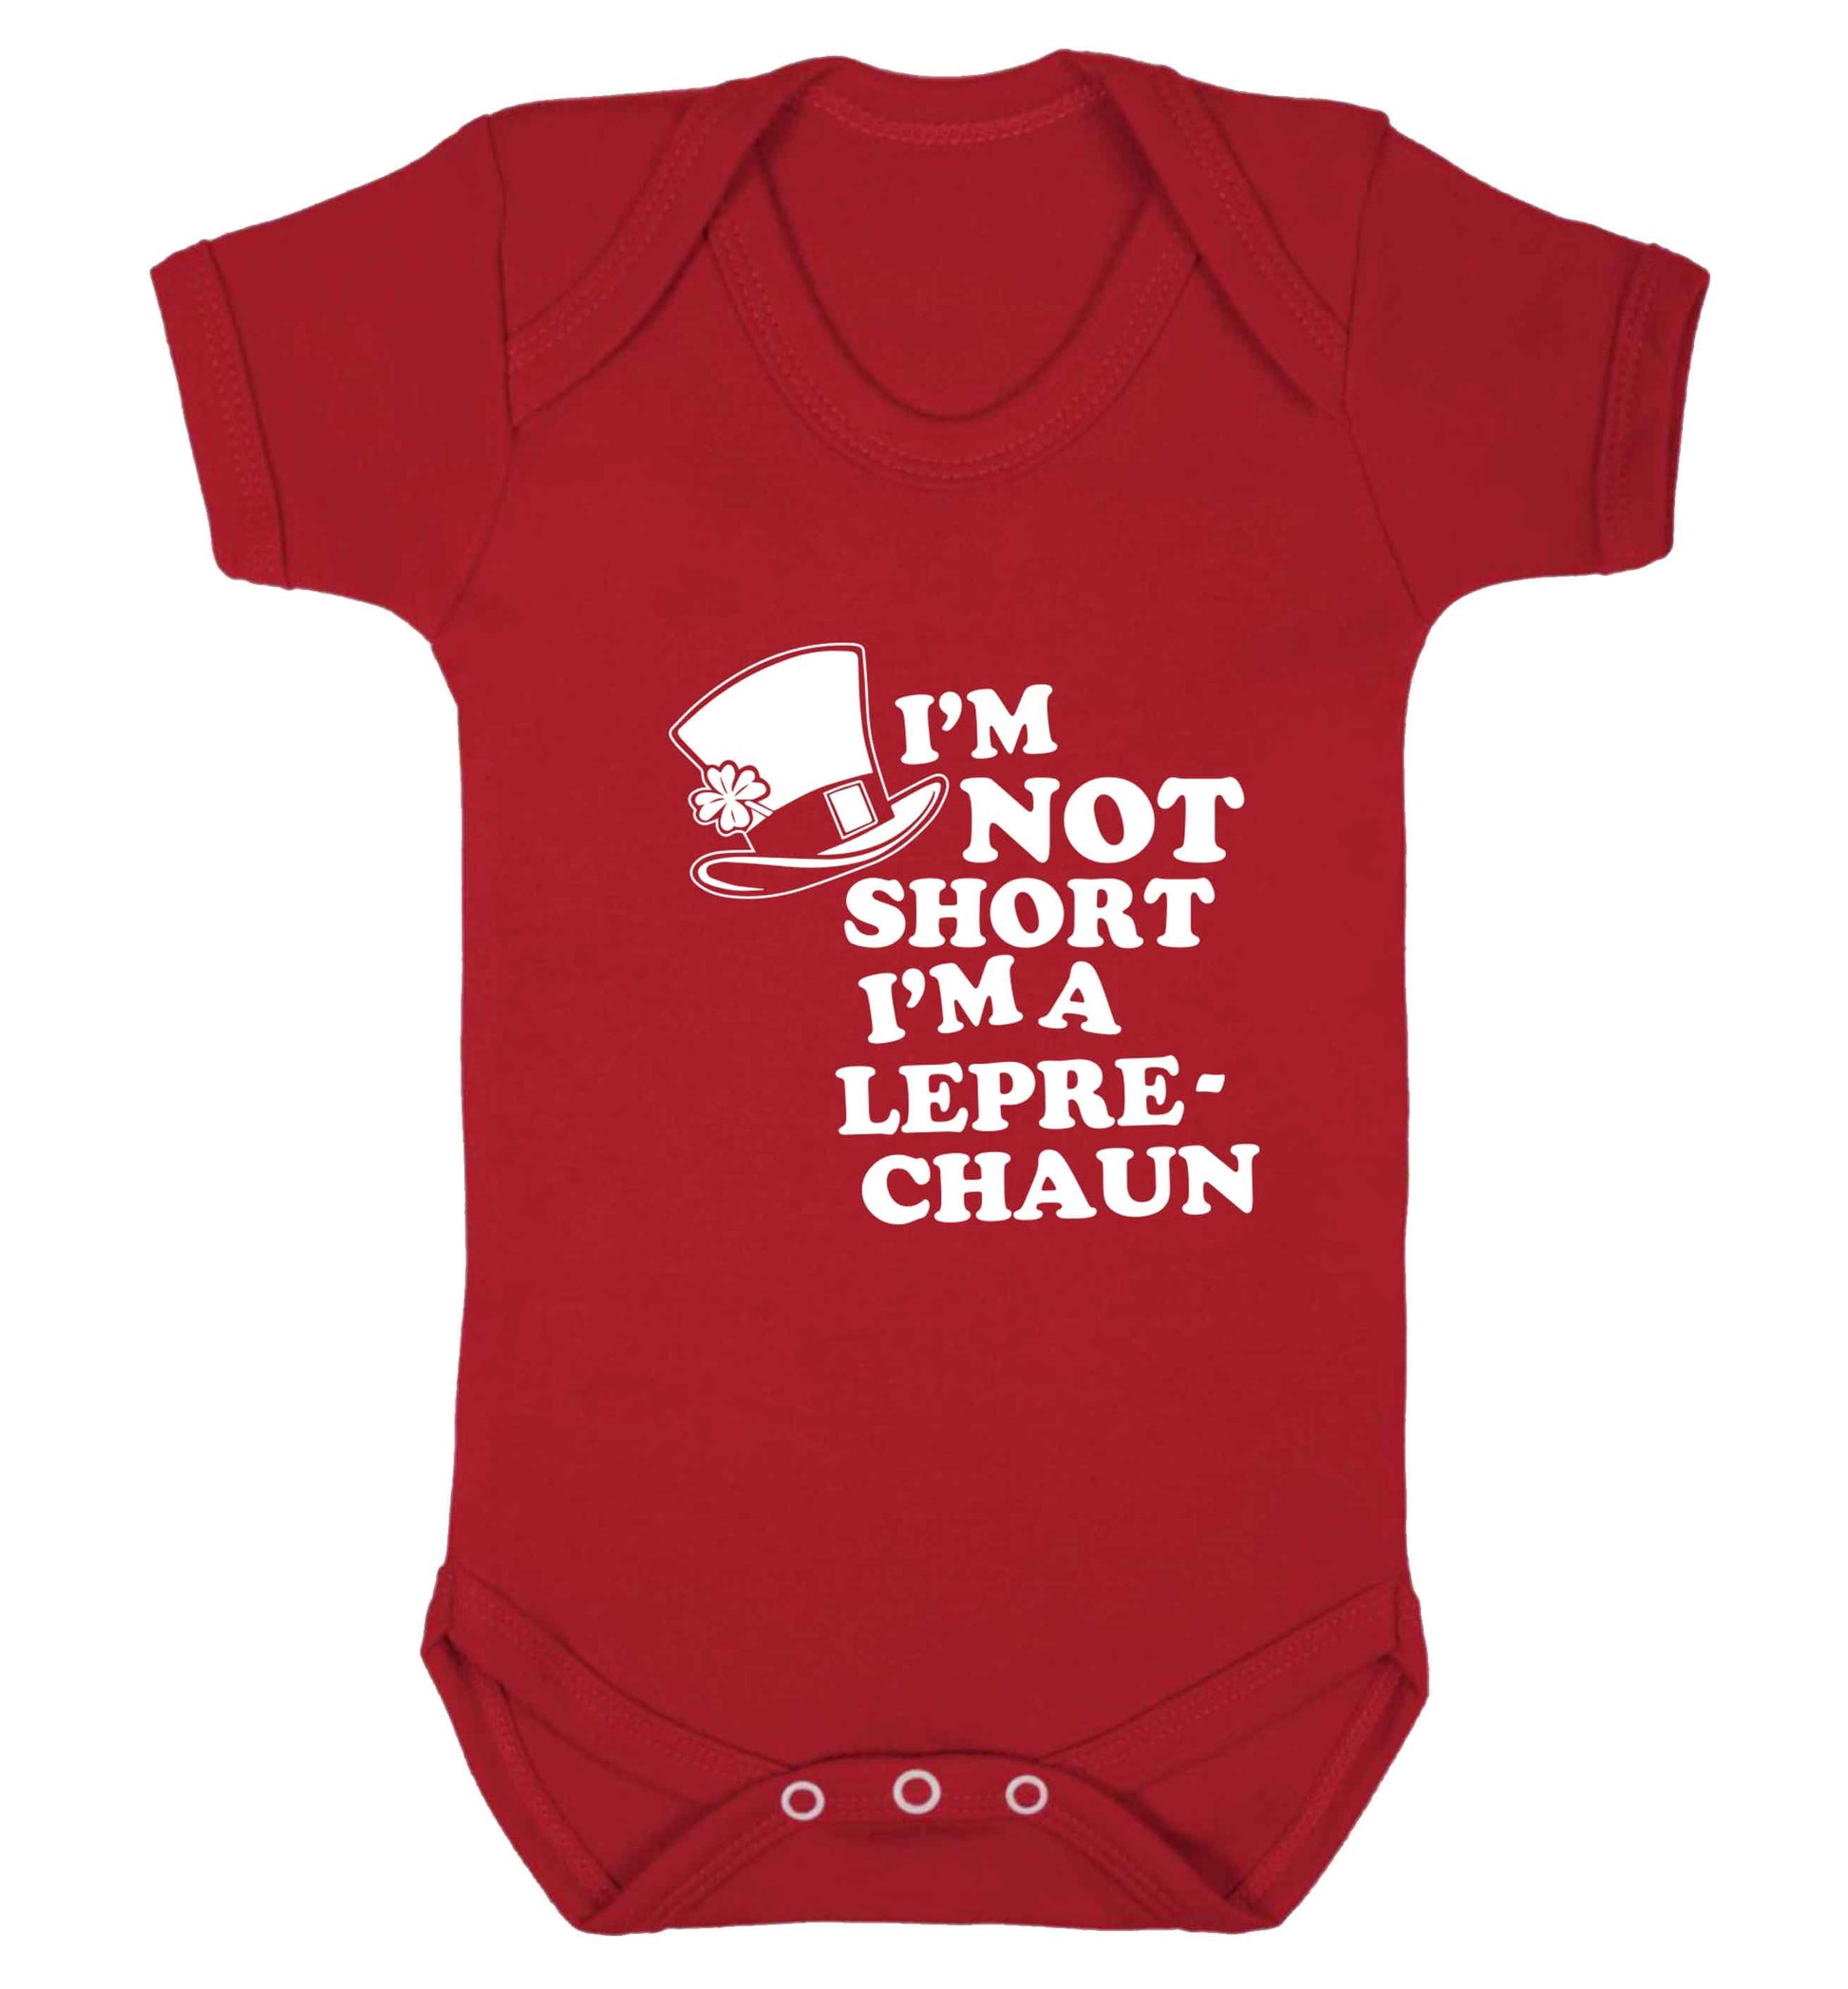 I'm not short I'm a leprechaun baby vest red 18-24 months